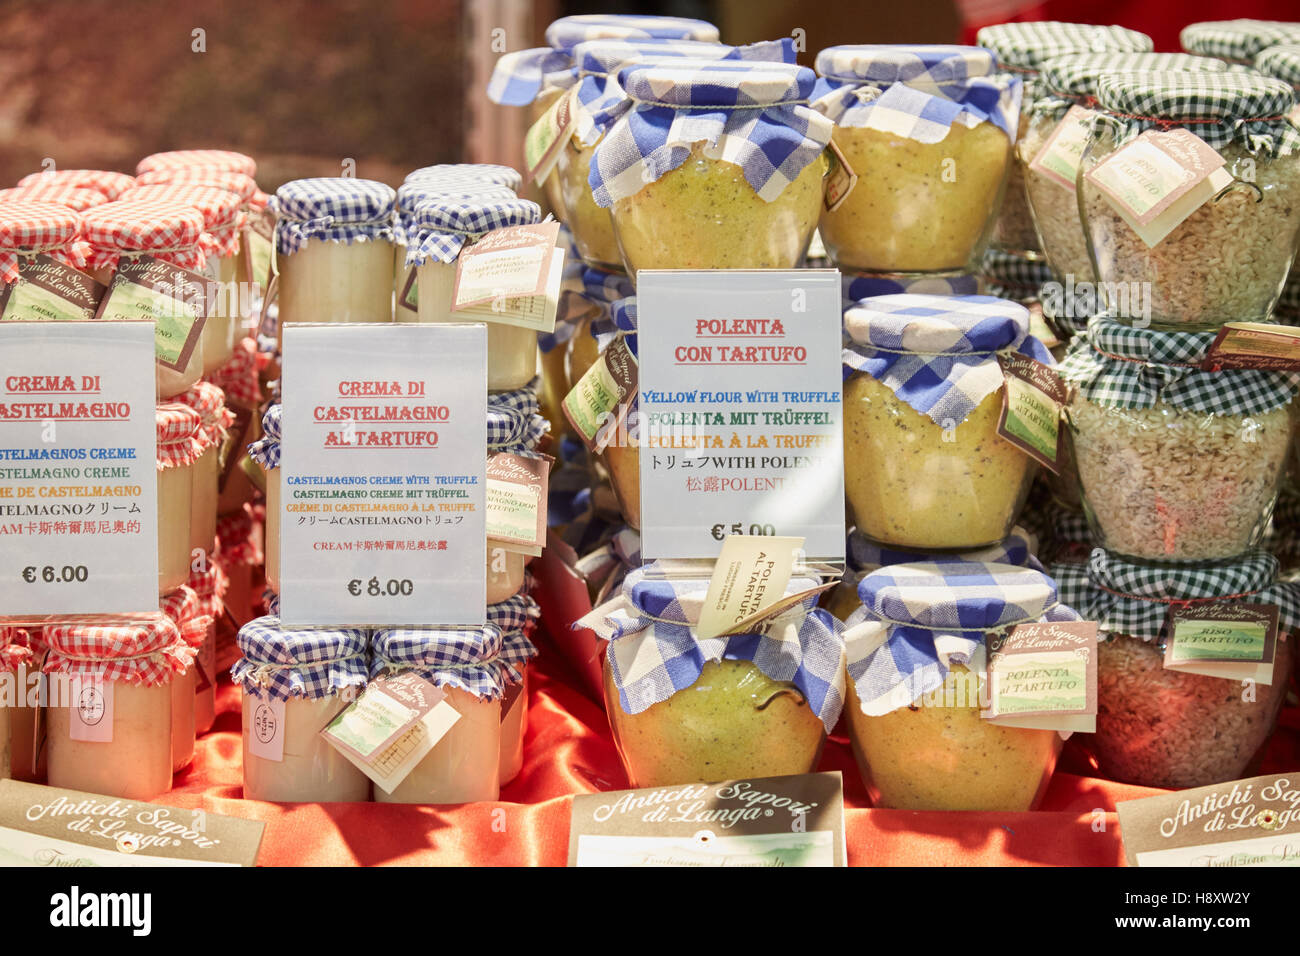 Truffle flavored cream and polenta on sale during Alba White Truffle Fair in Alba, Italy Stock Photo